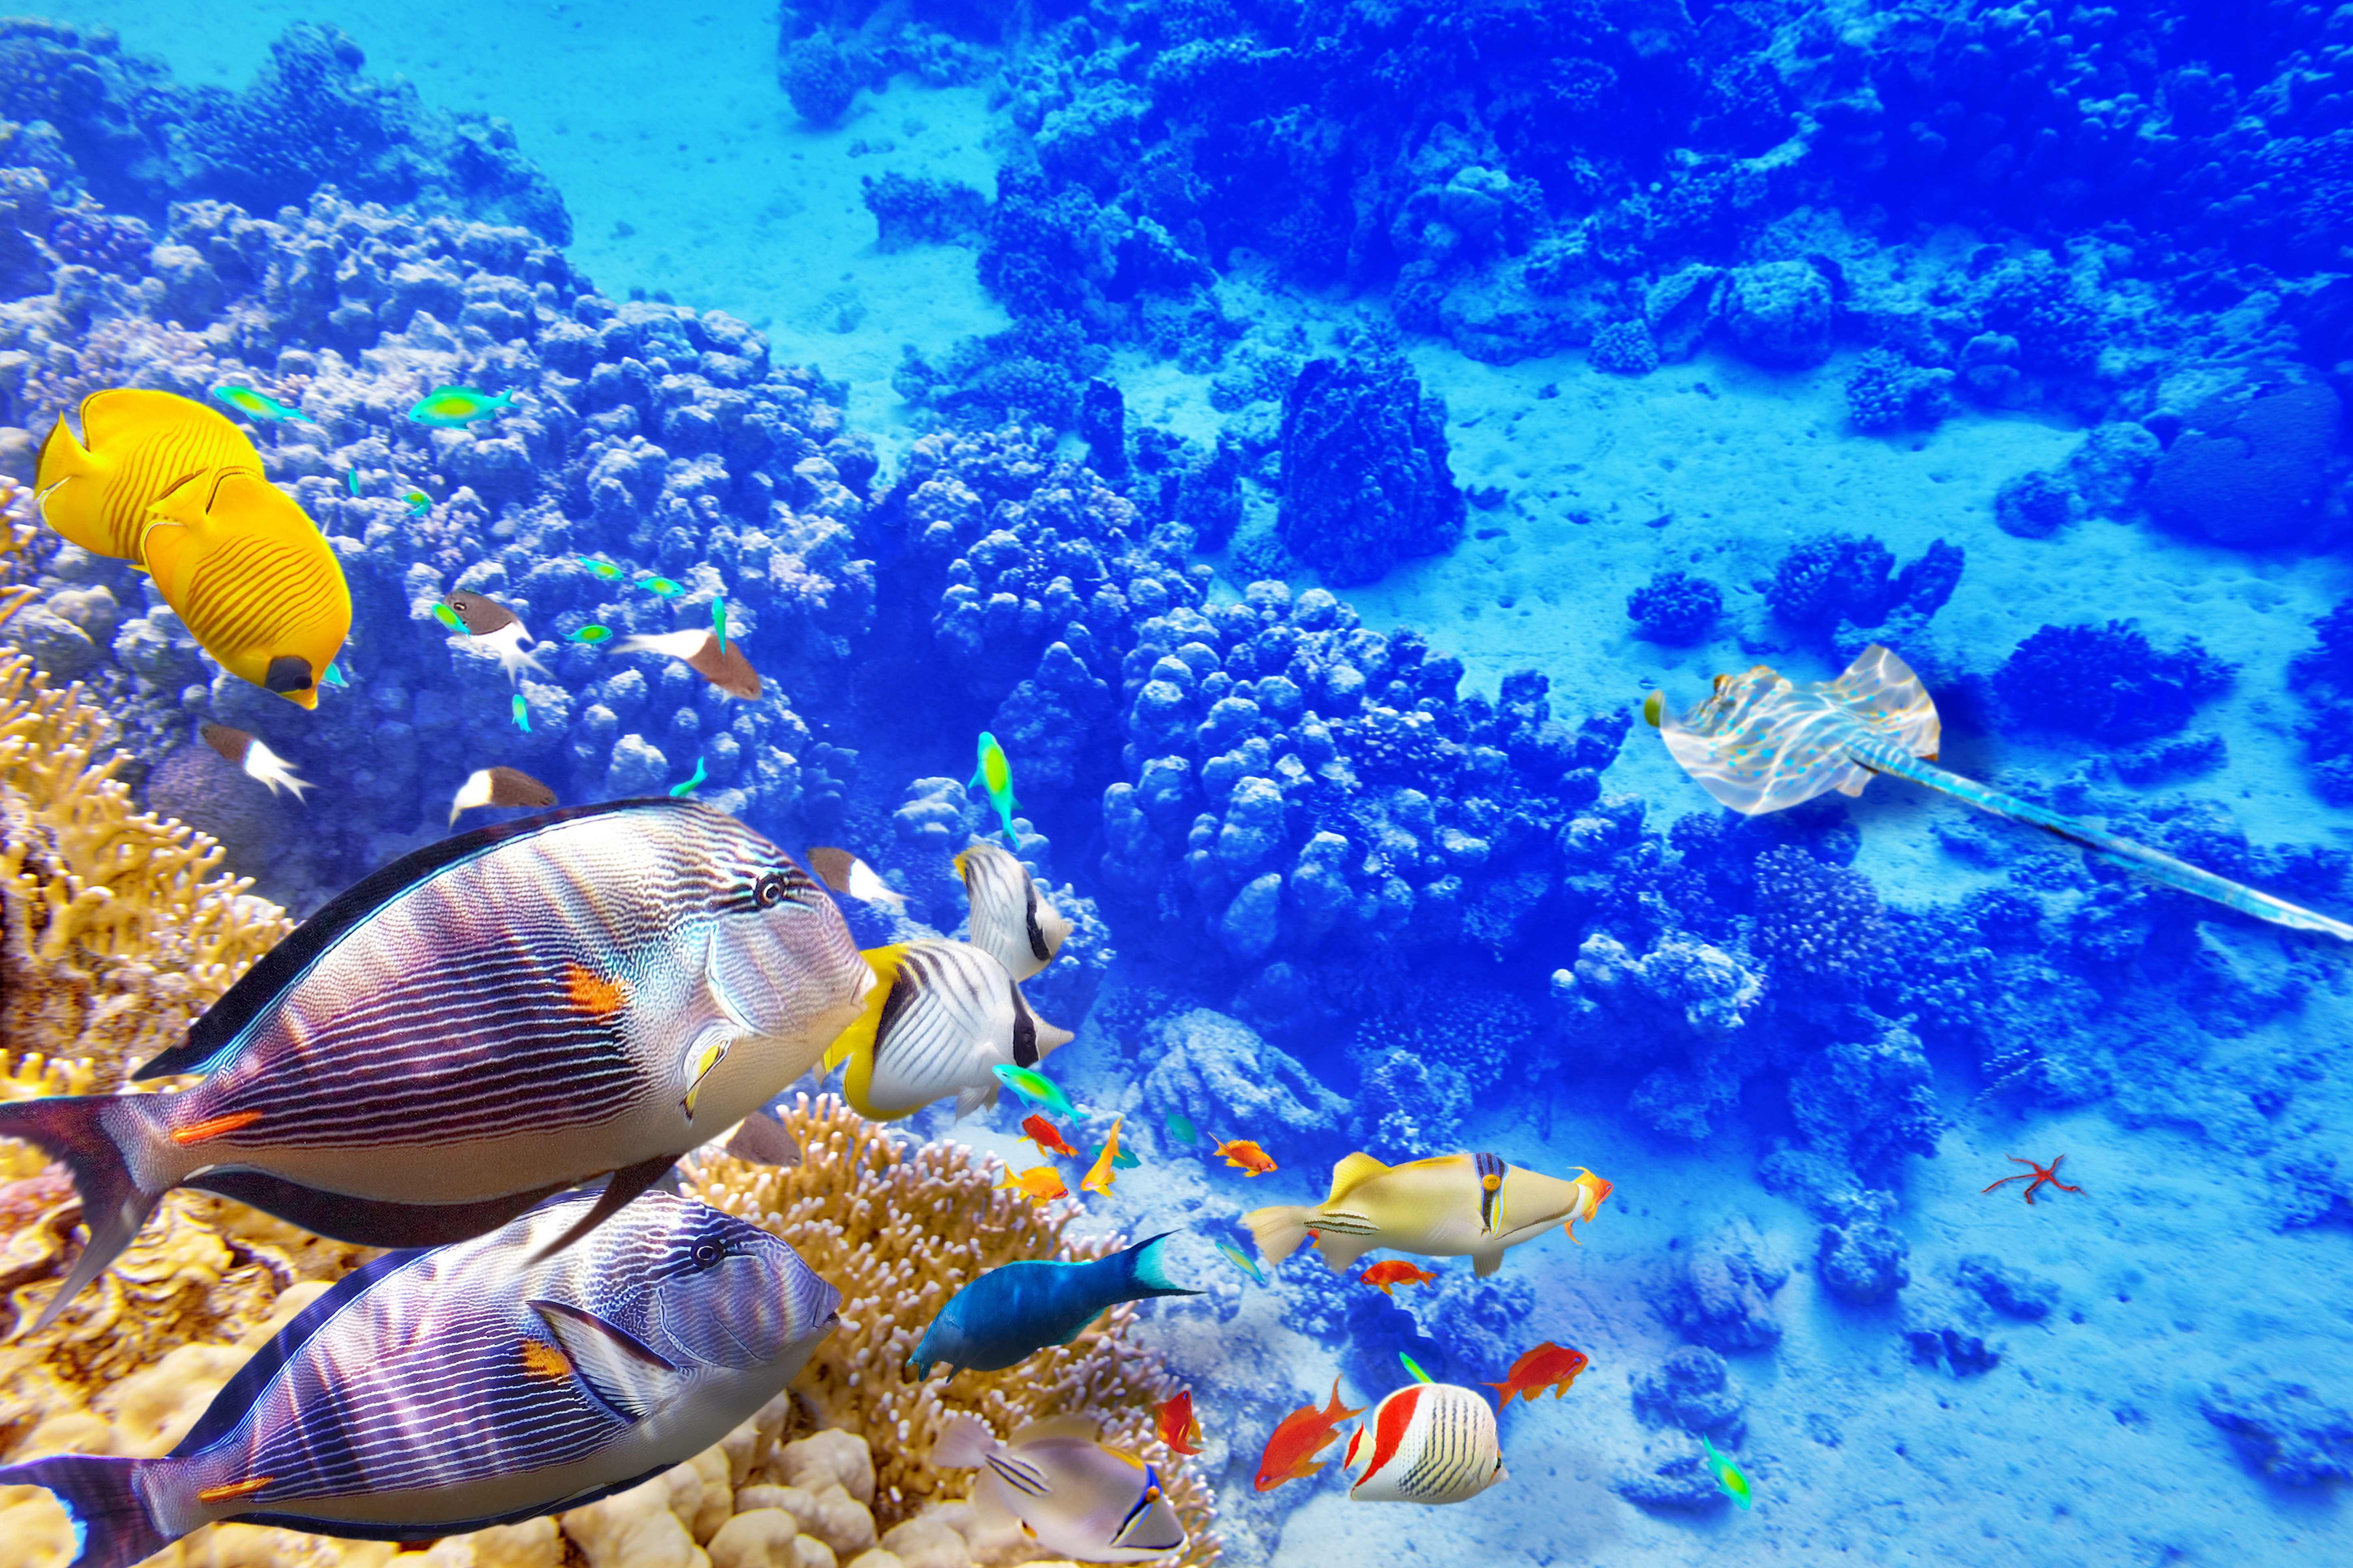 Coral reef wallpaper hd